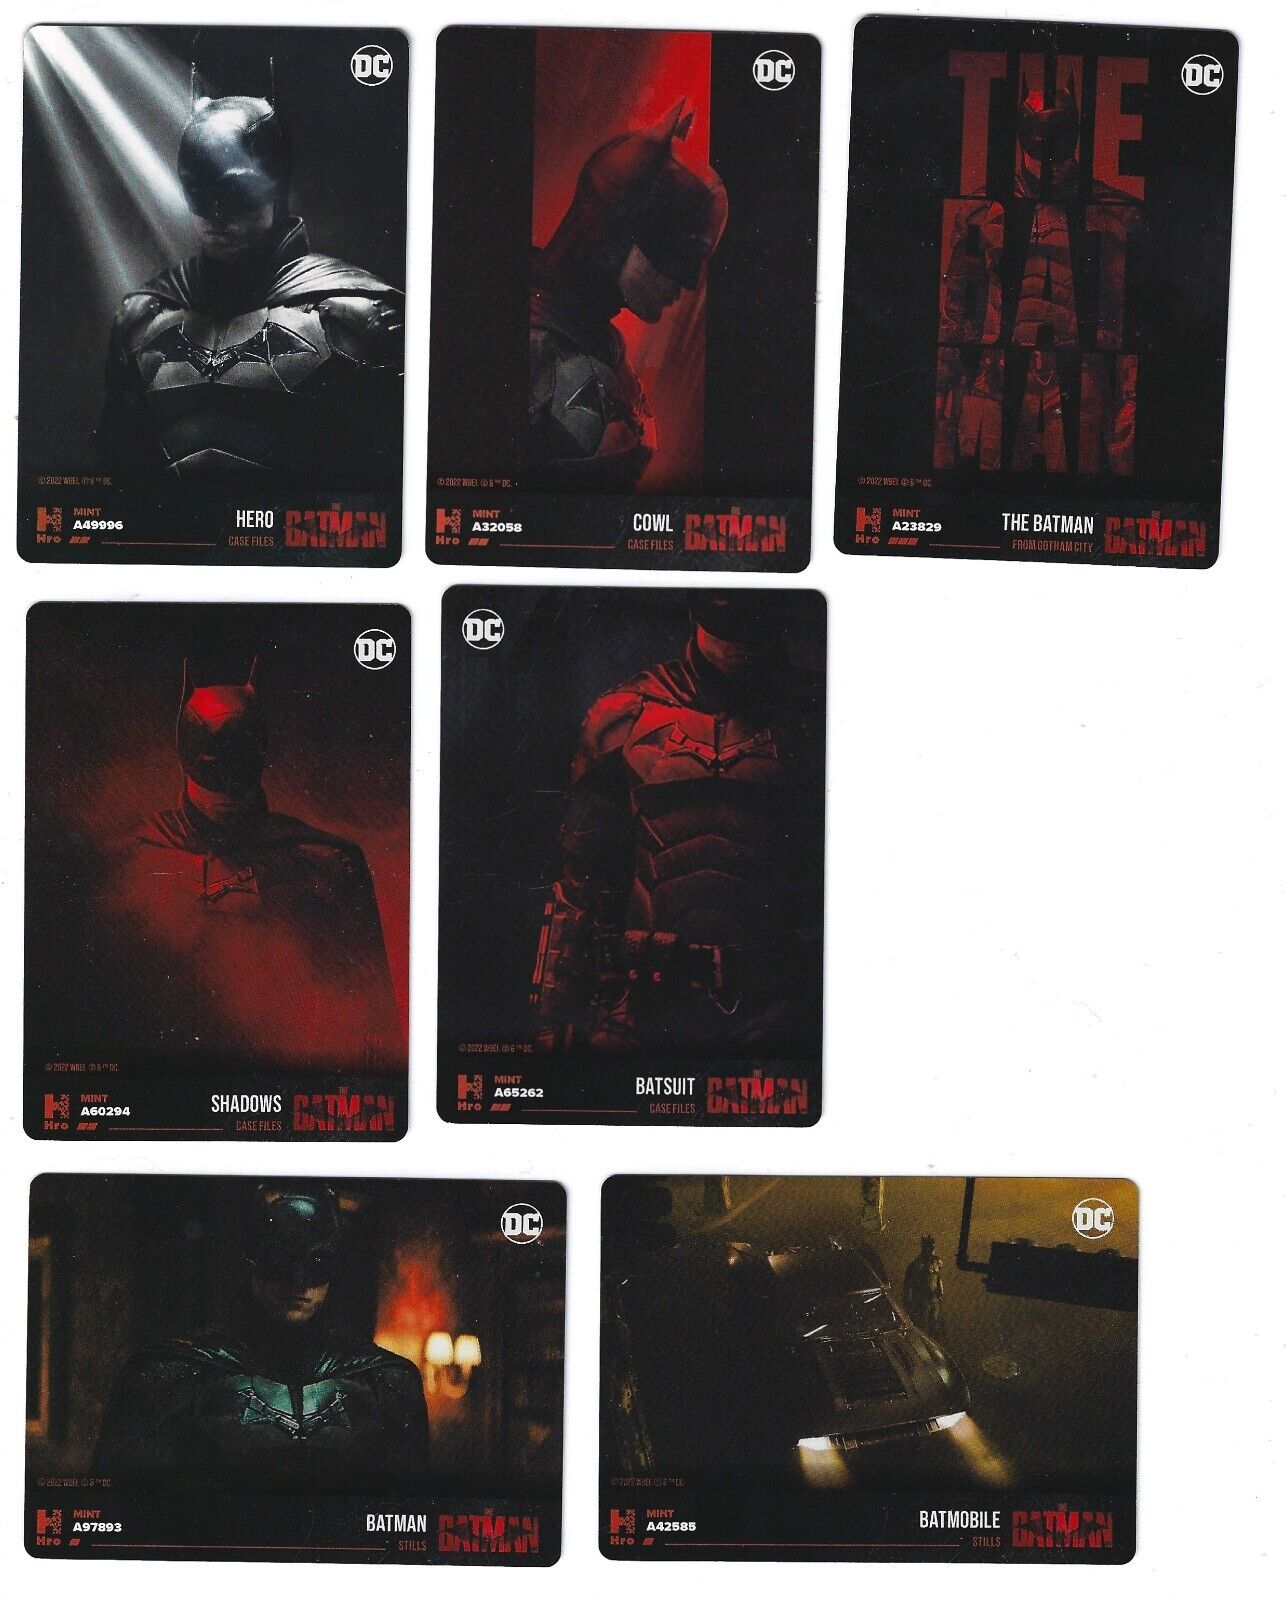 The Batman cards - physical cards